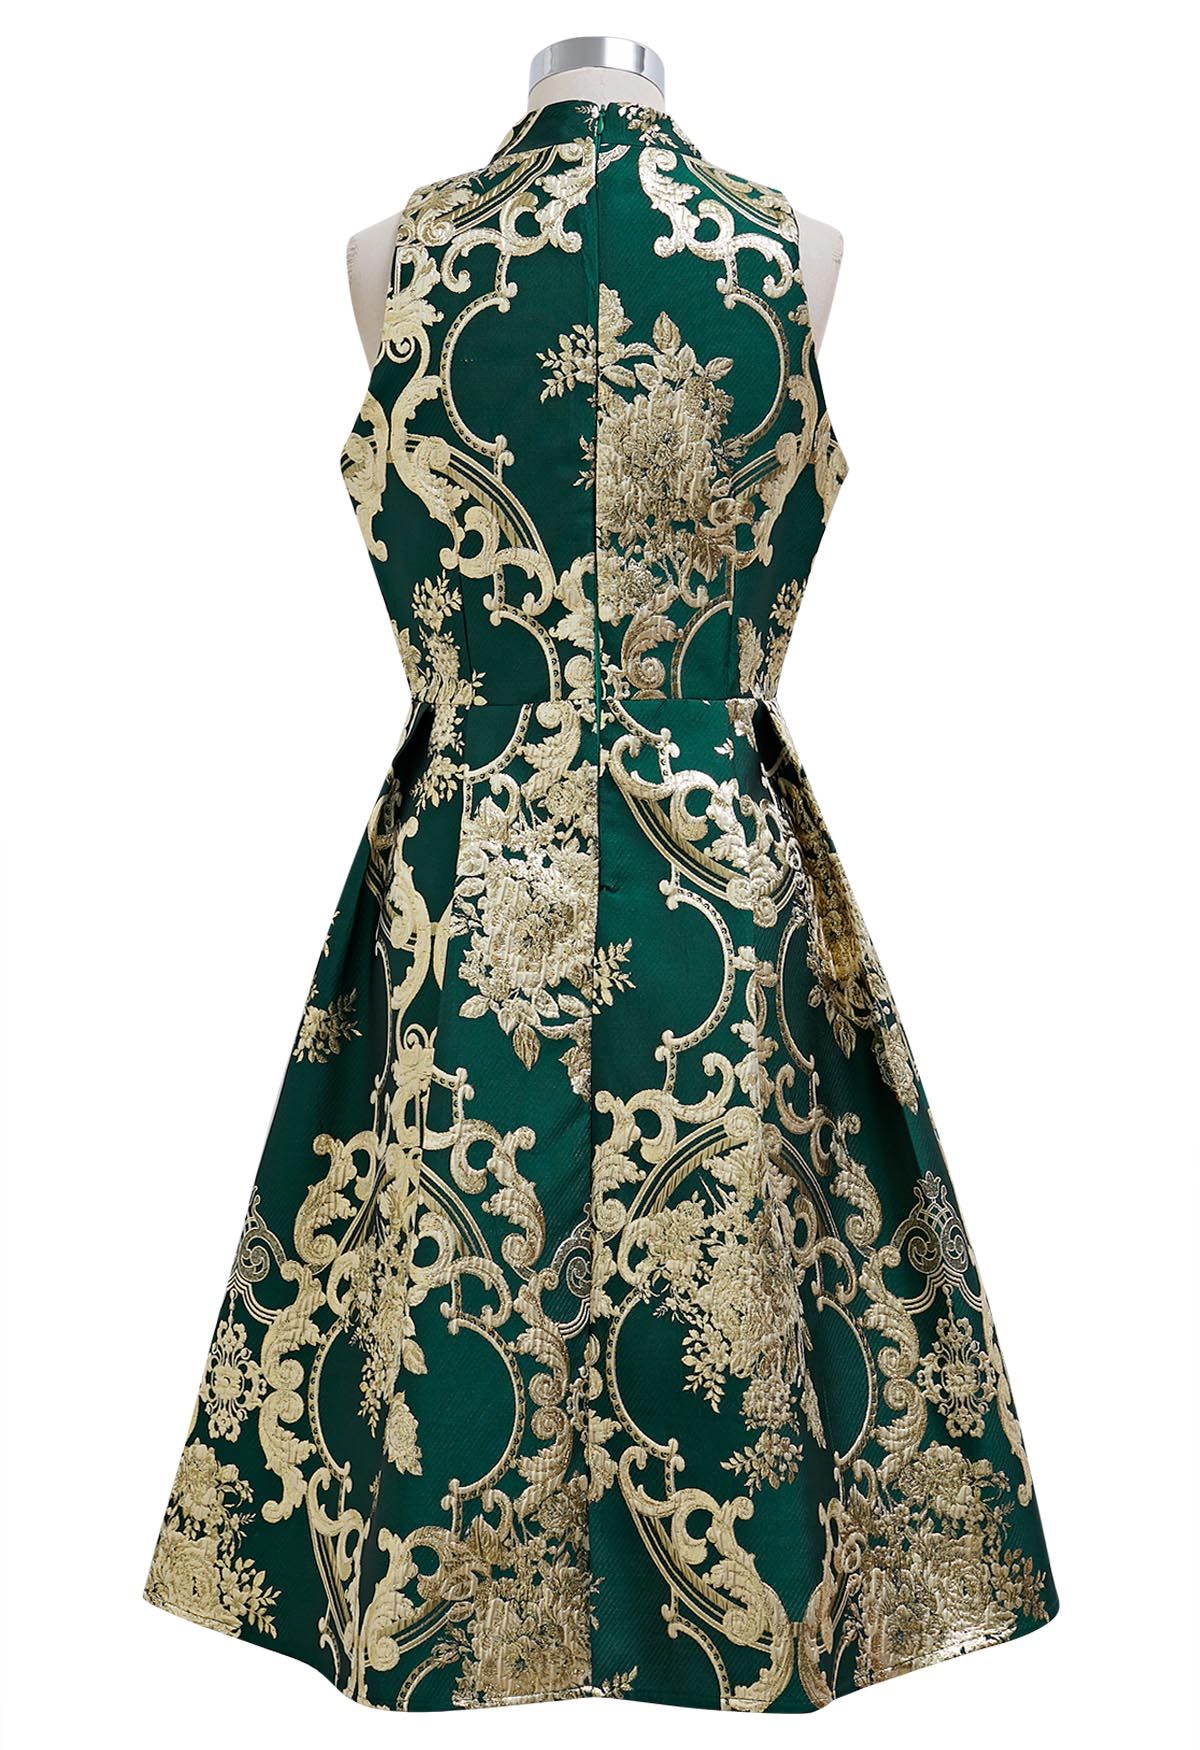 Wunderschönes ärmelloses Kleid aus Jacquard im Pfingstrosen-Barockstil in Dunkelgrün